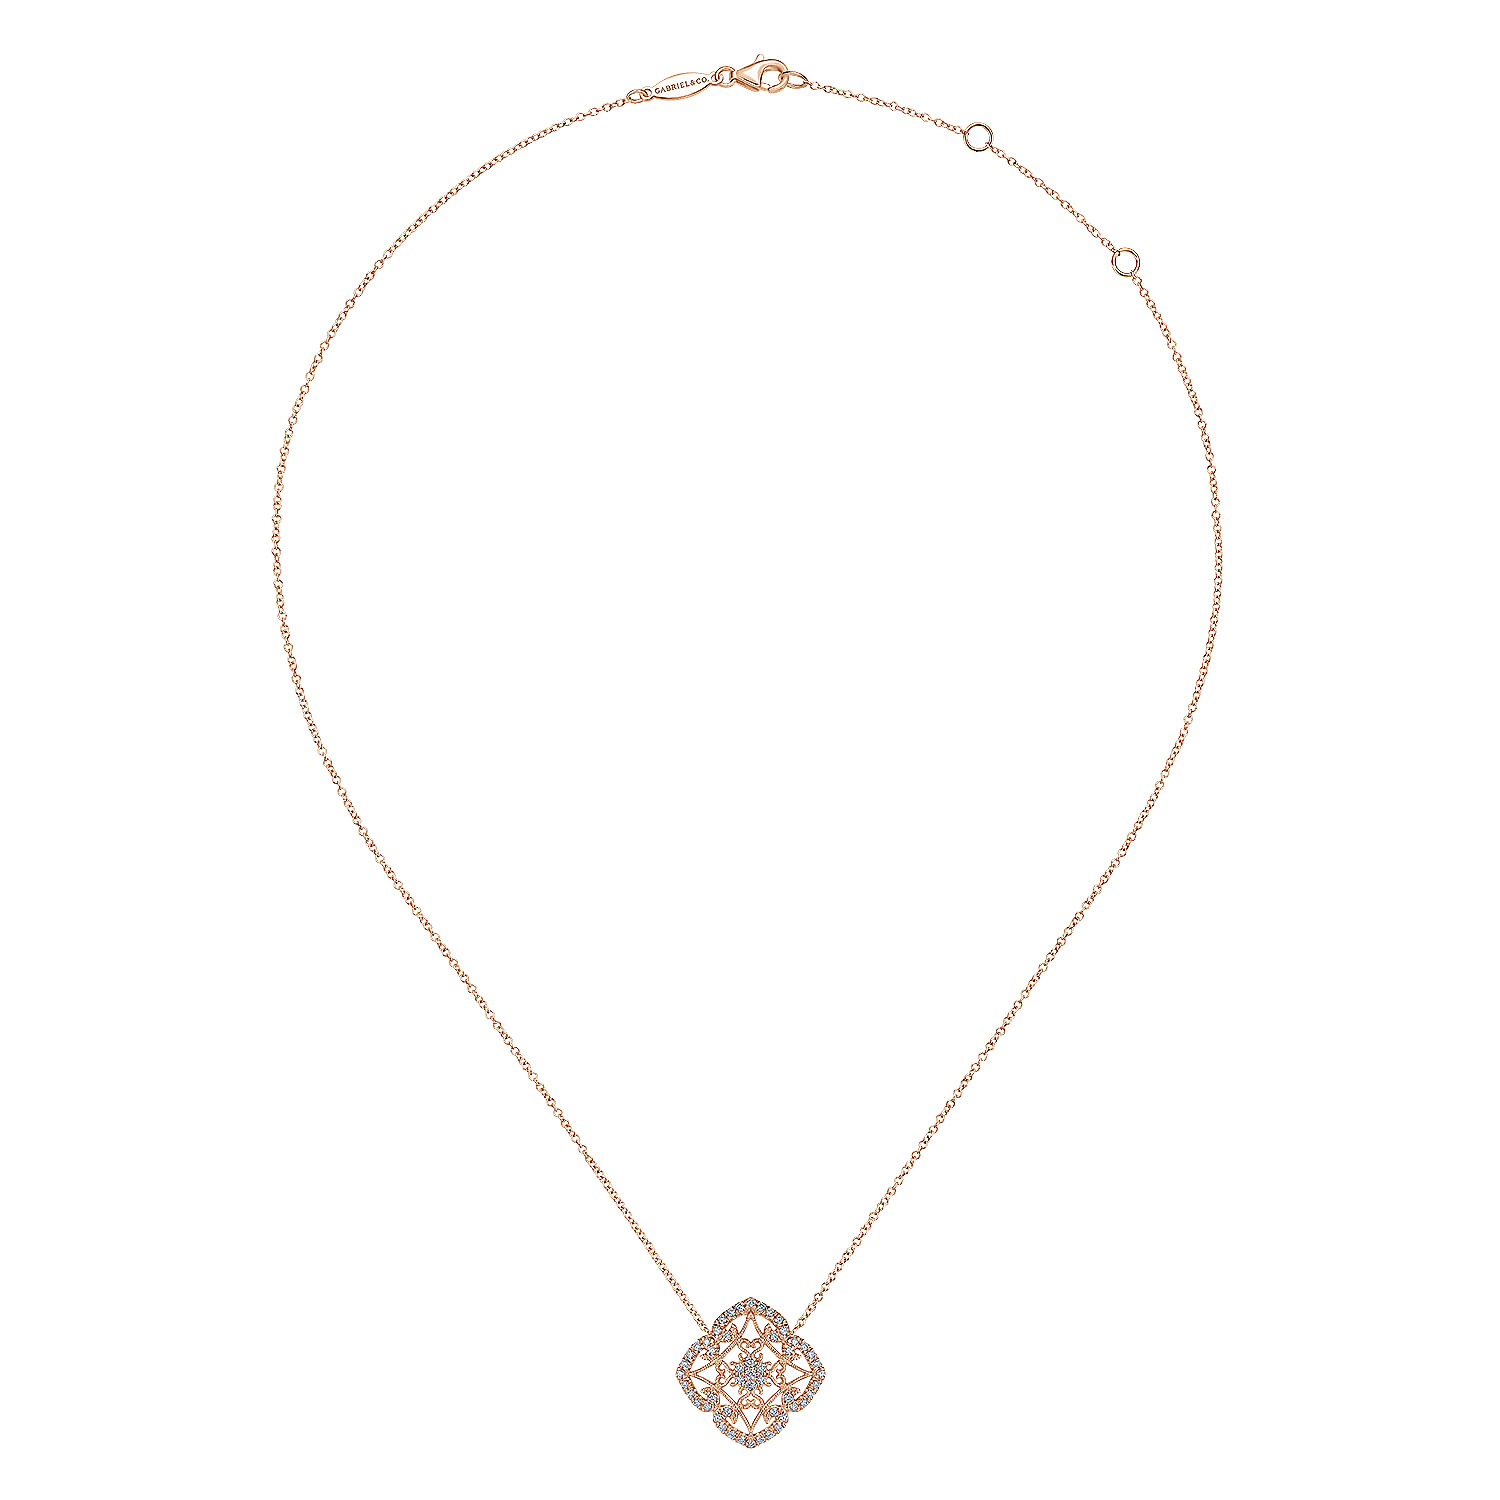 Vintage Inspired 14K Rose Gold Filigree Diamond Pendant Necklace - 0.37 ct - Shot 2